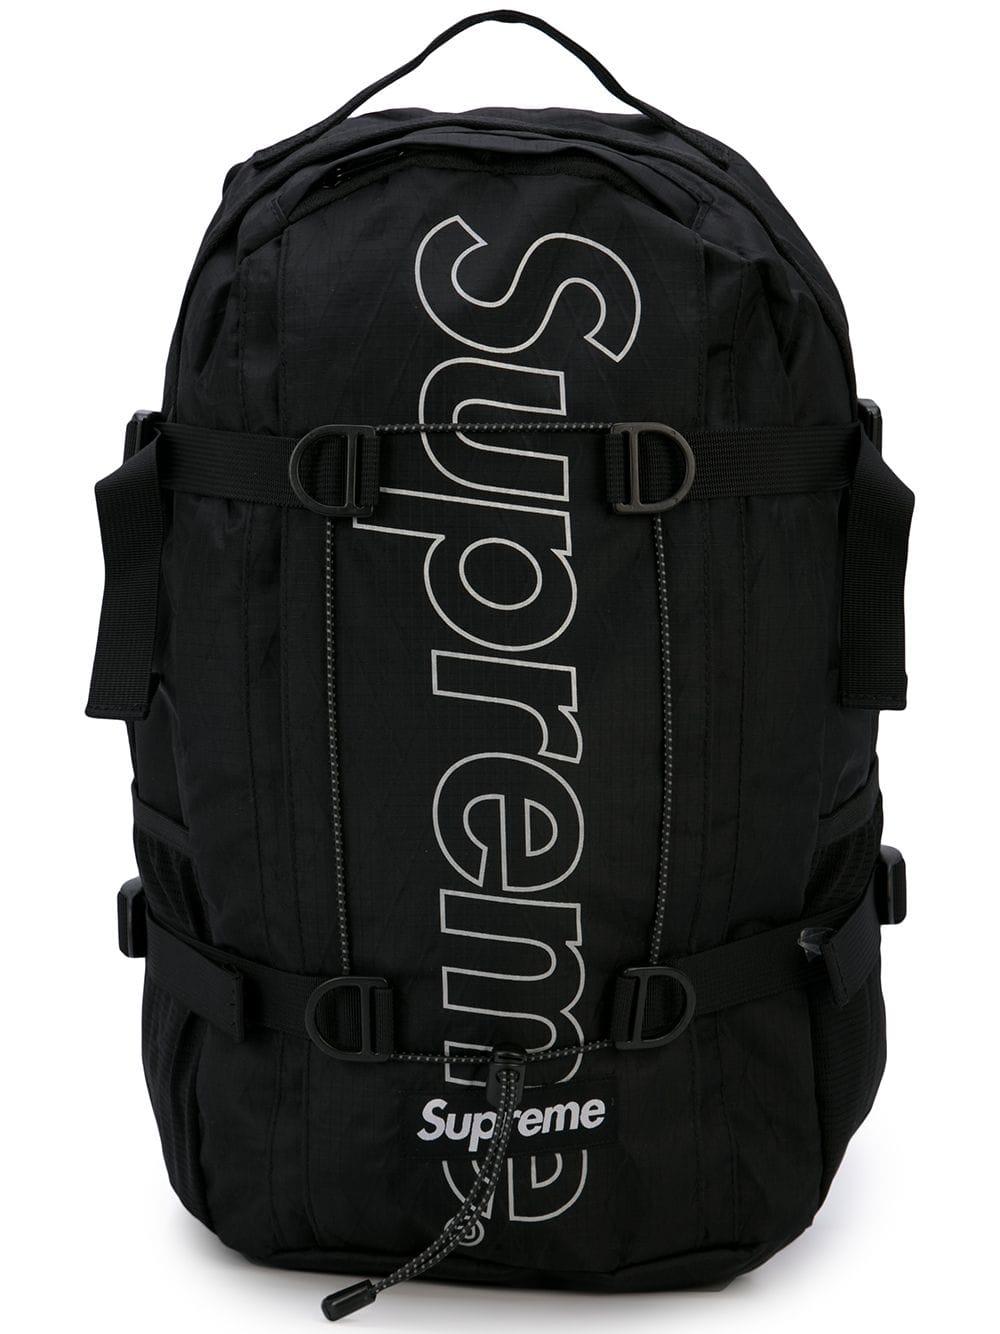 Black Supreme Backpack Shop, 58% OFF | www.ingeniovirtual.com